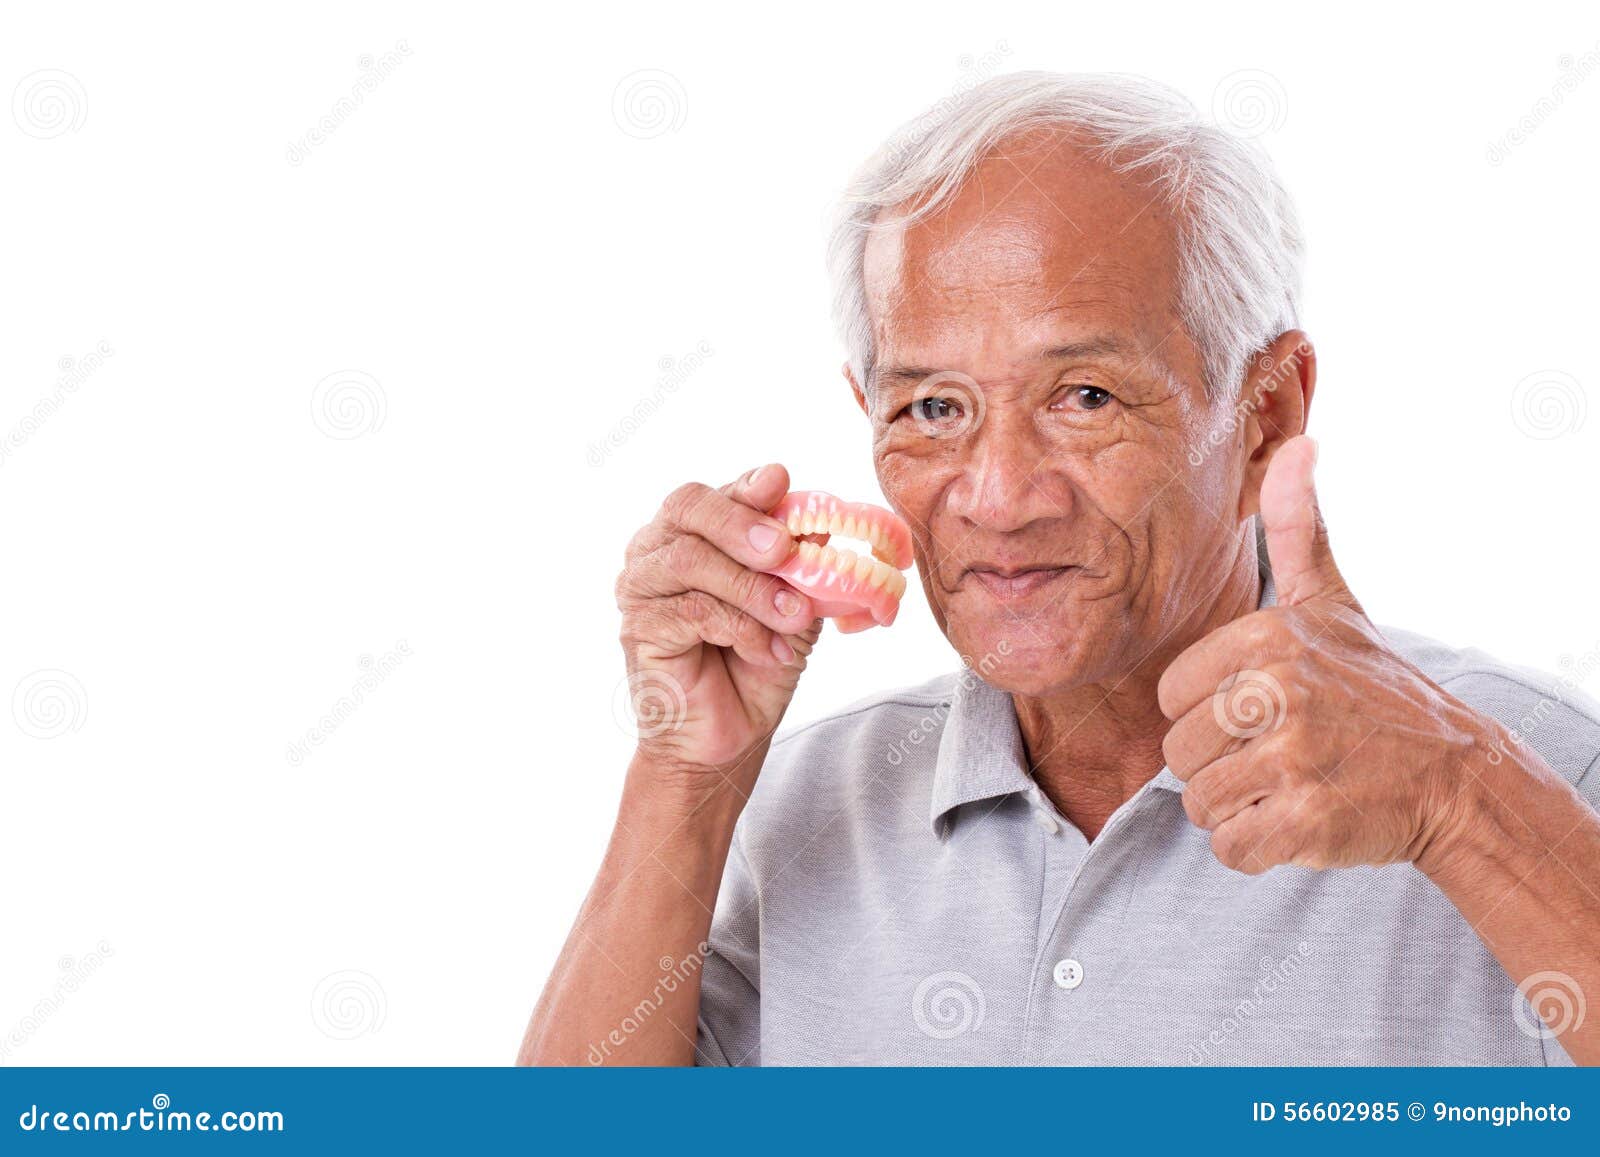 senior man with denture, giving thumb up